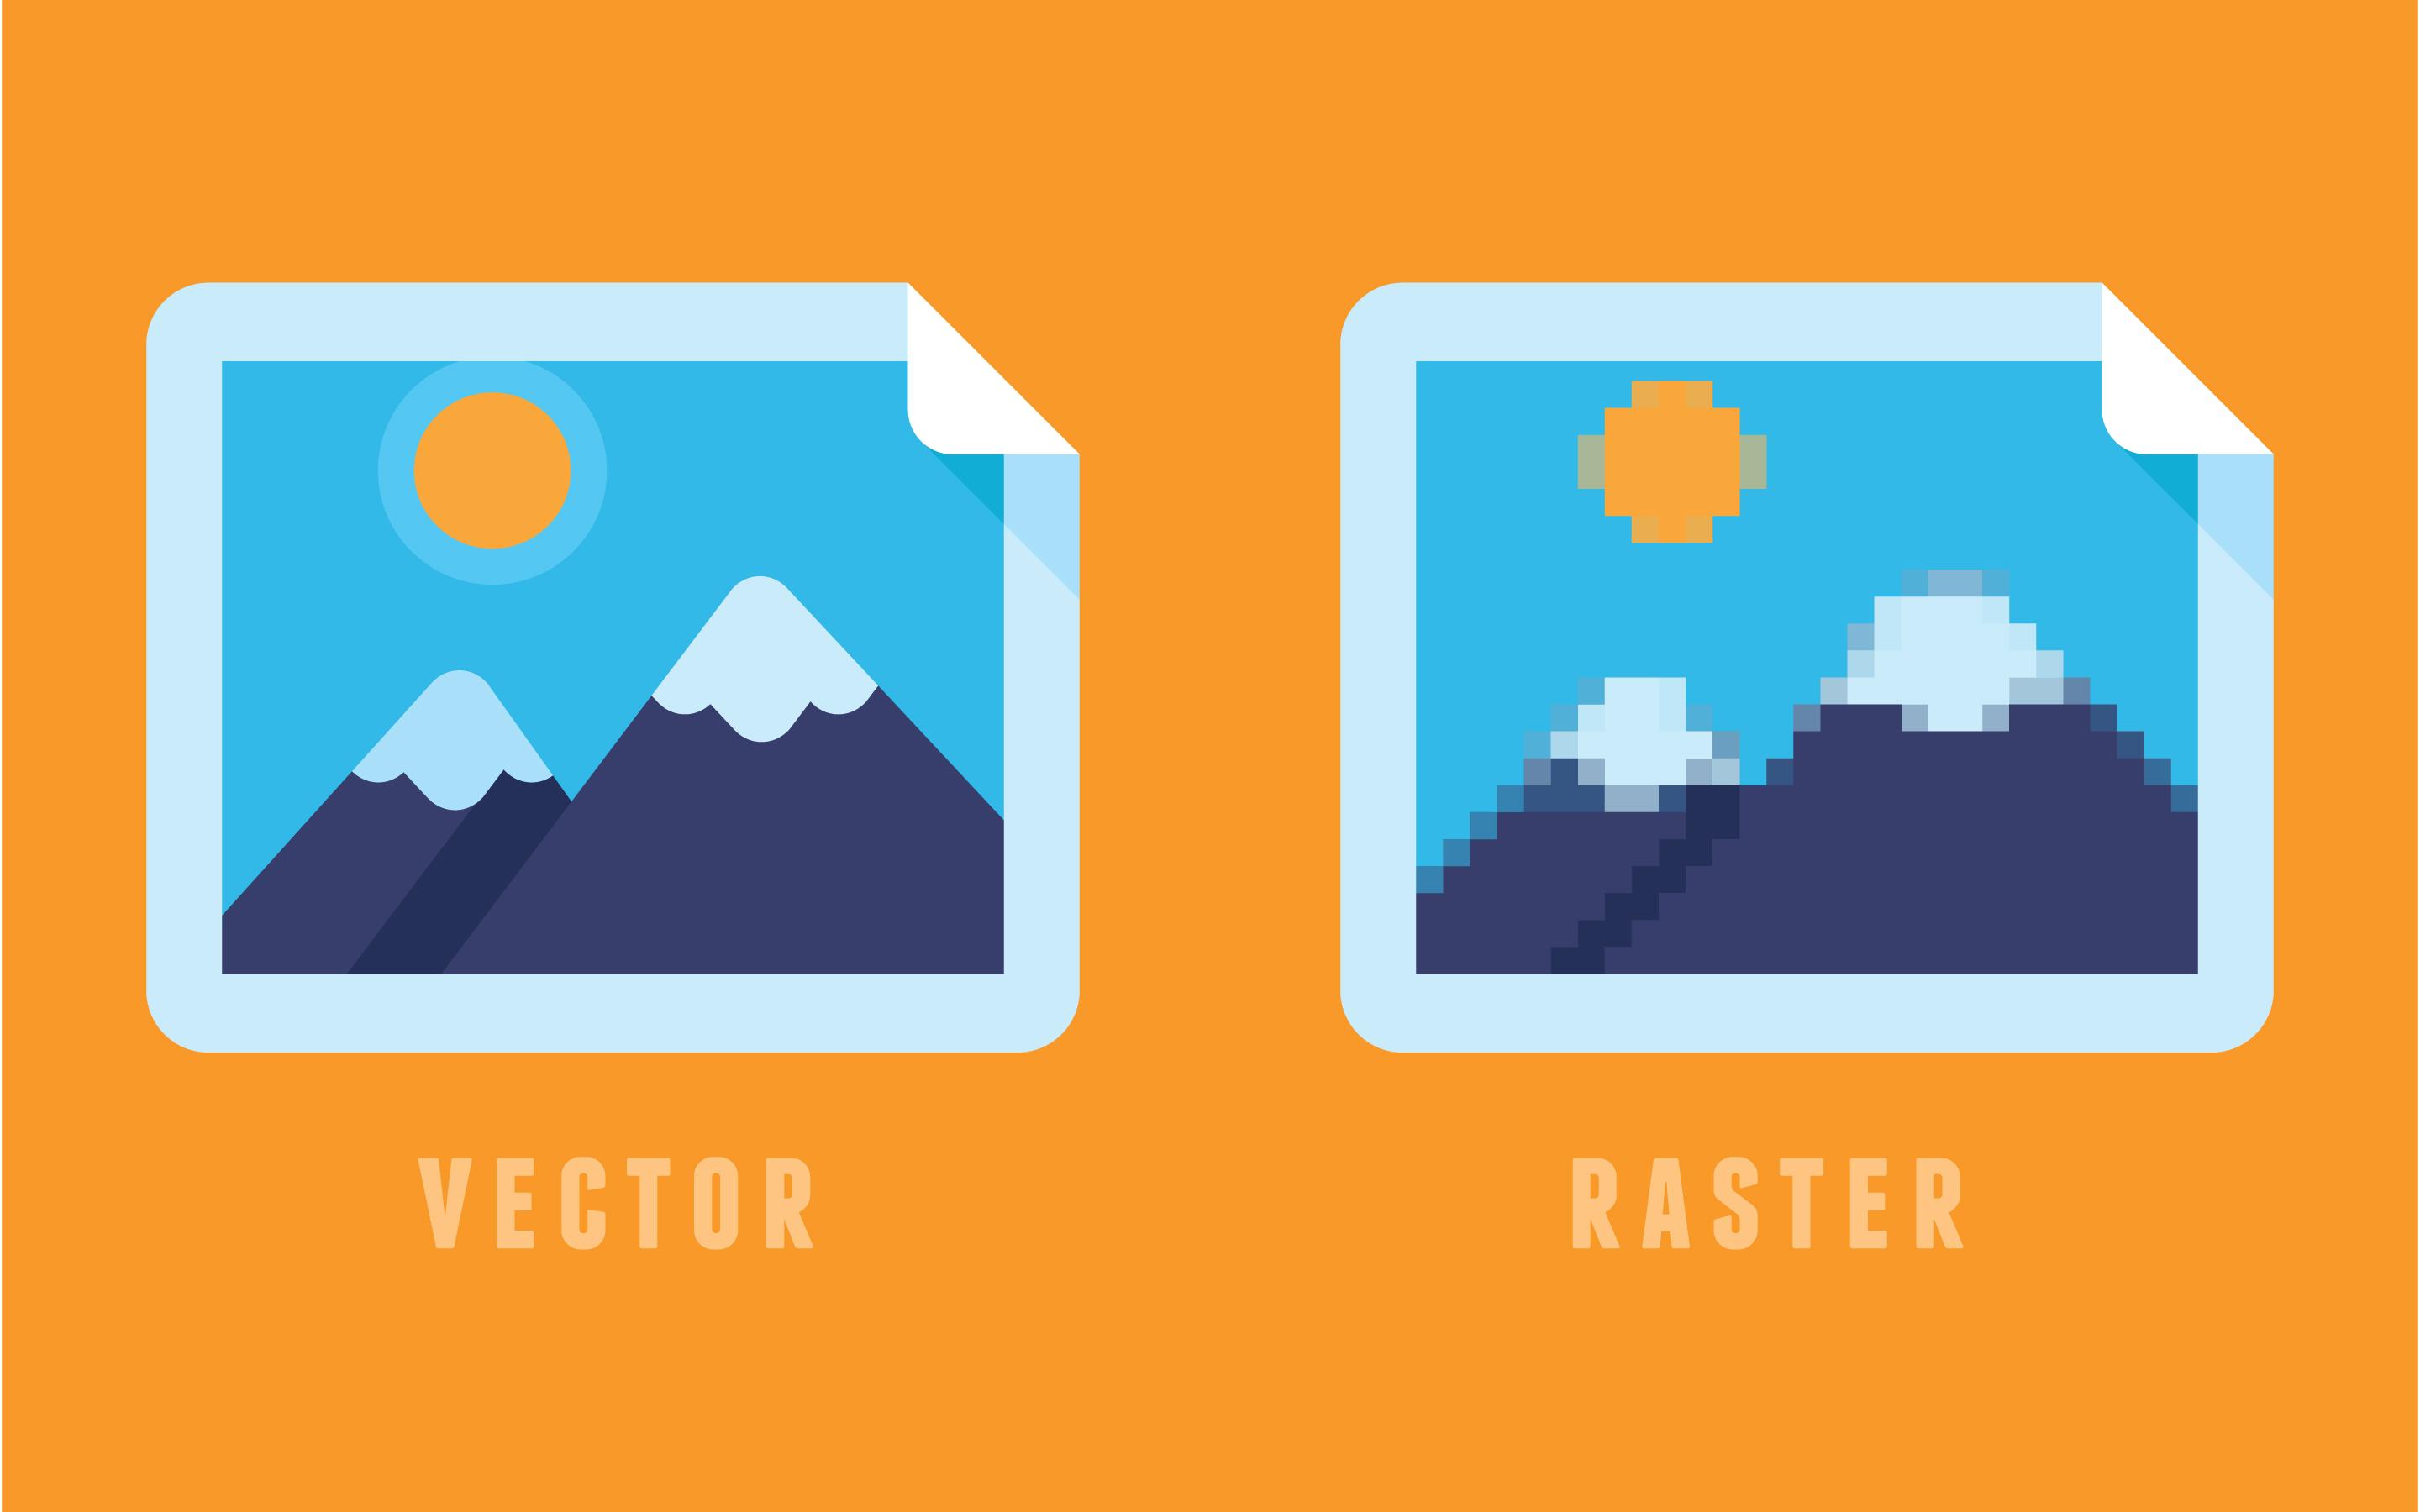 Vector-vs-Raster_Featured-Image.jpg